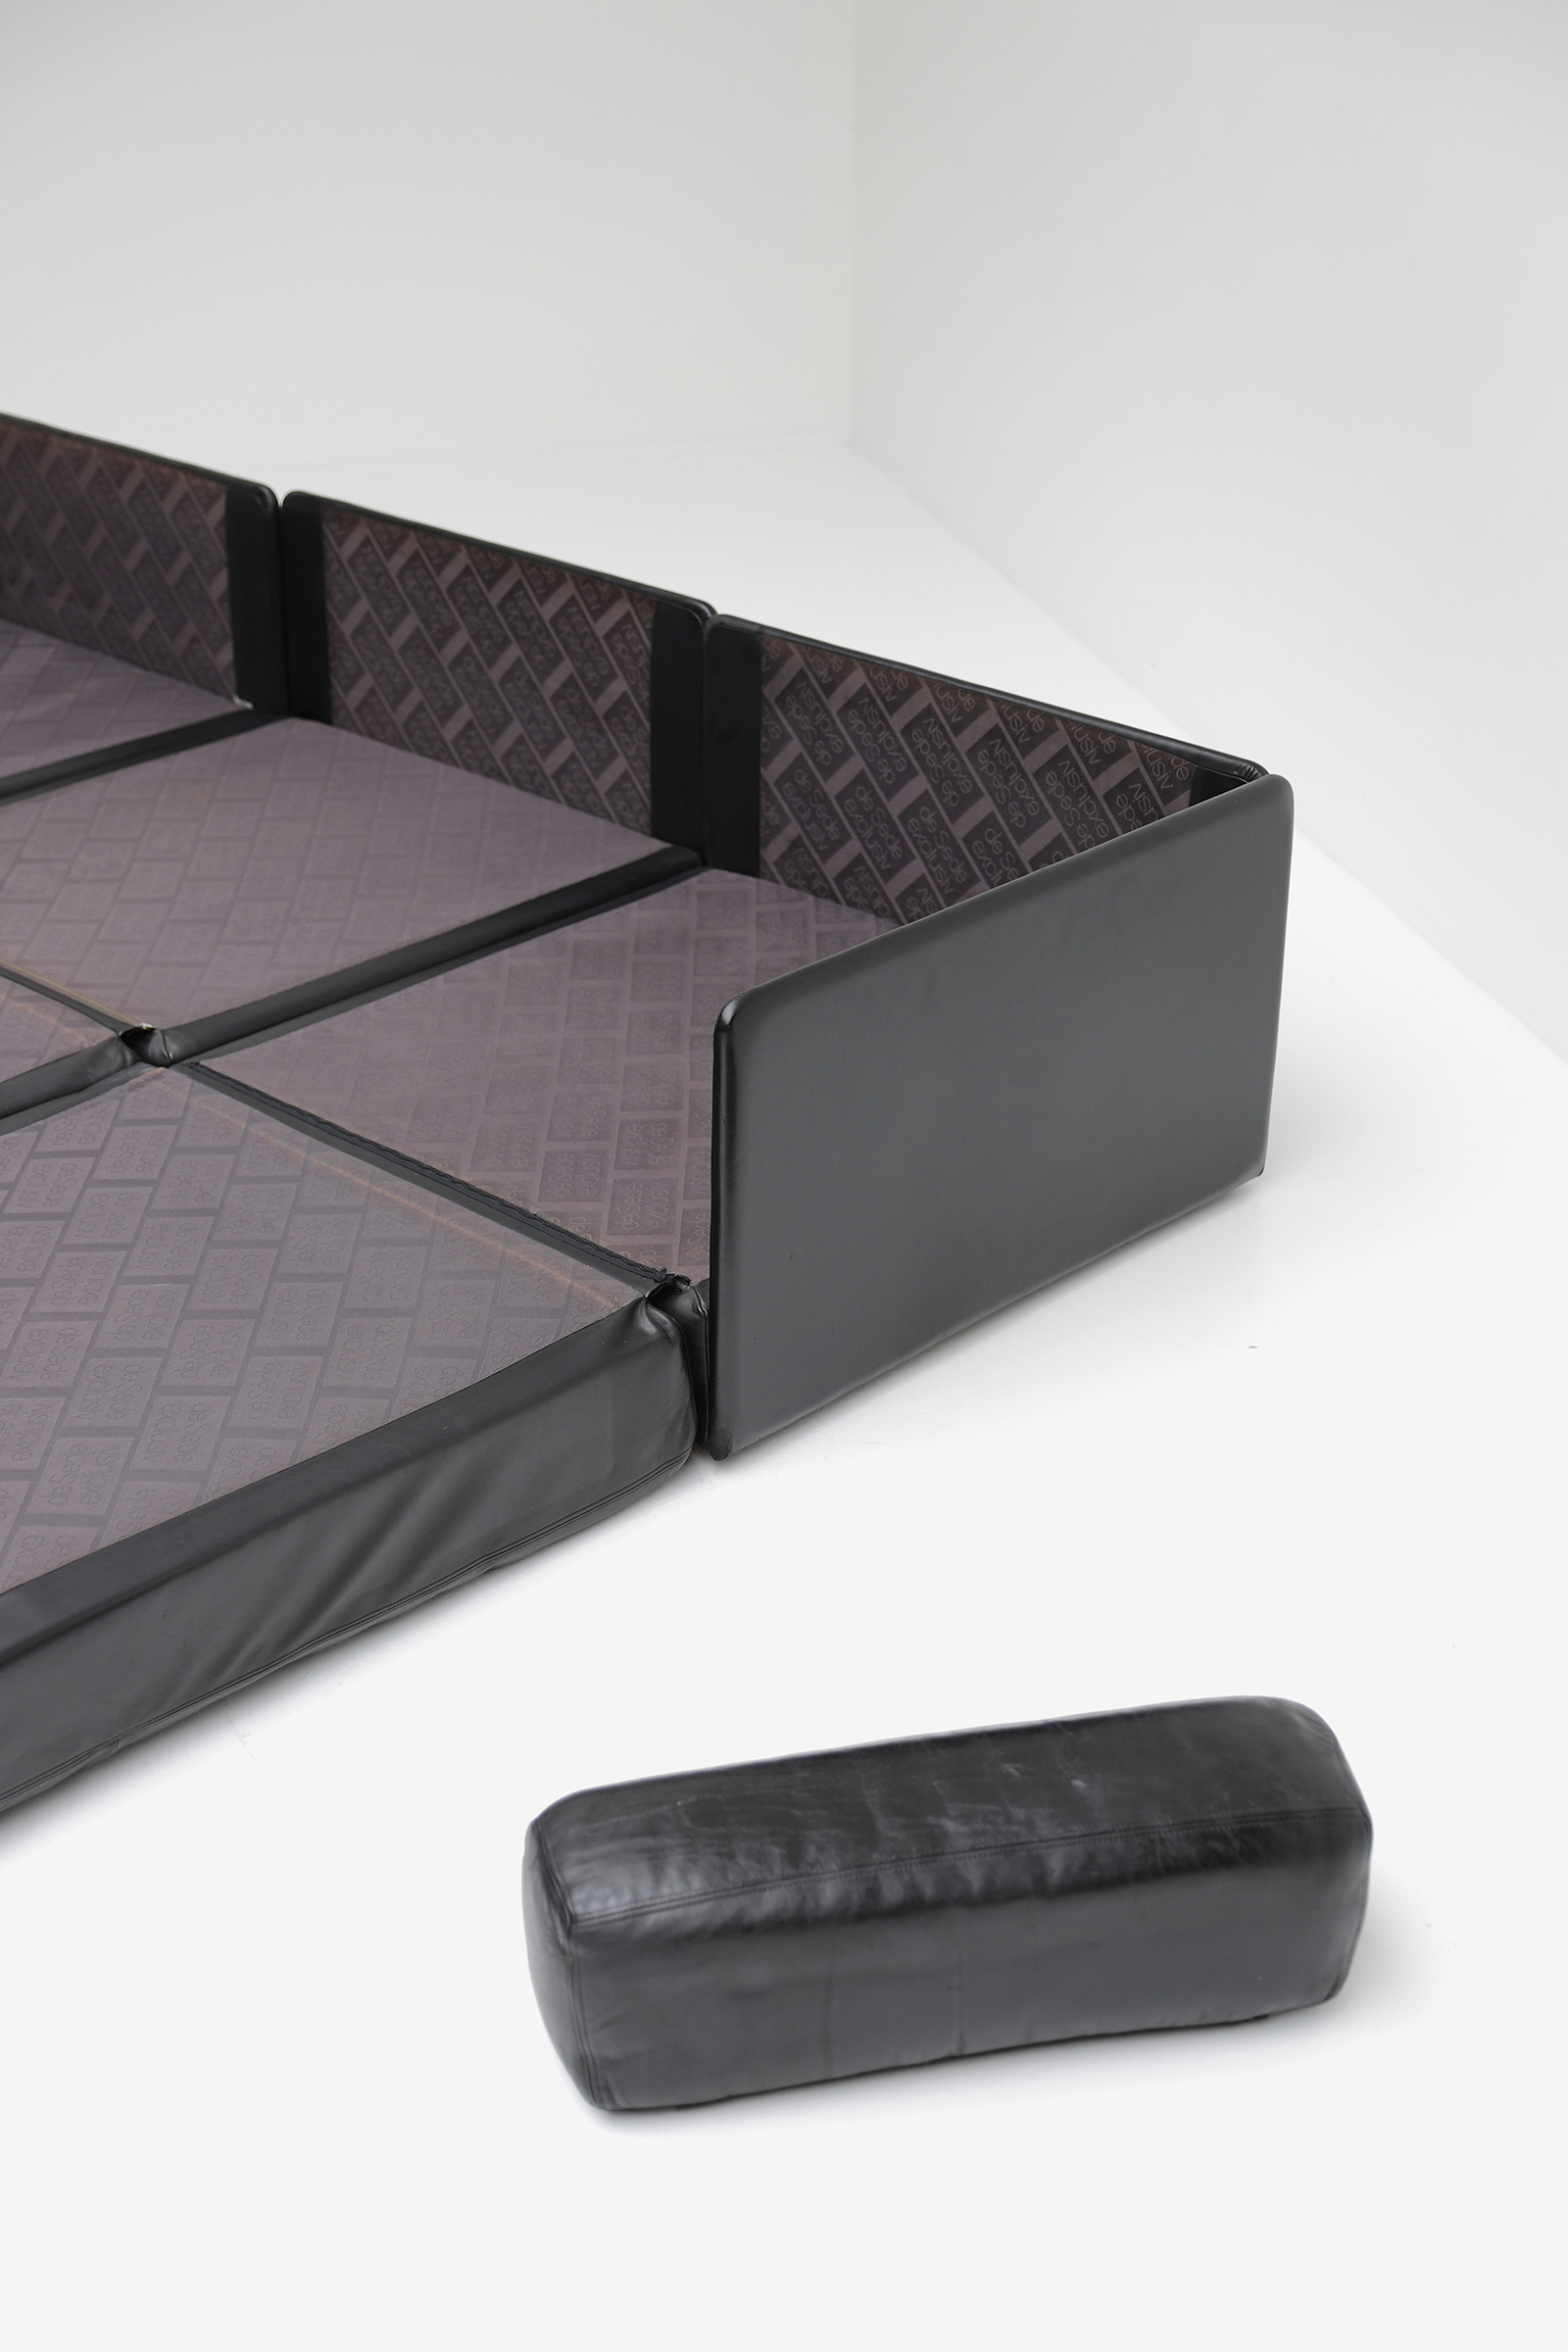 De Sede DS 76 Black Leather Sofa image 8